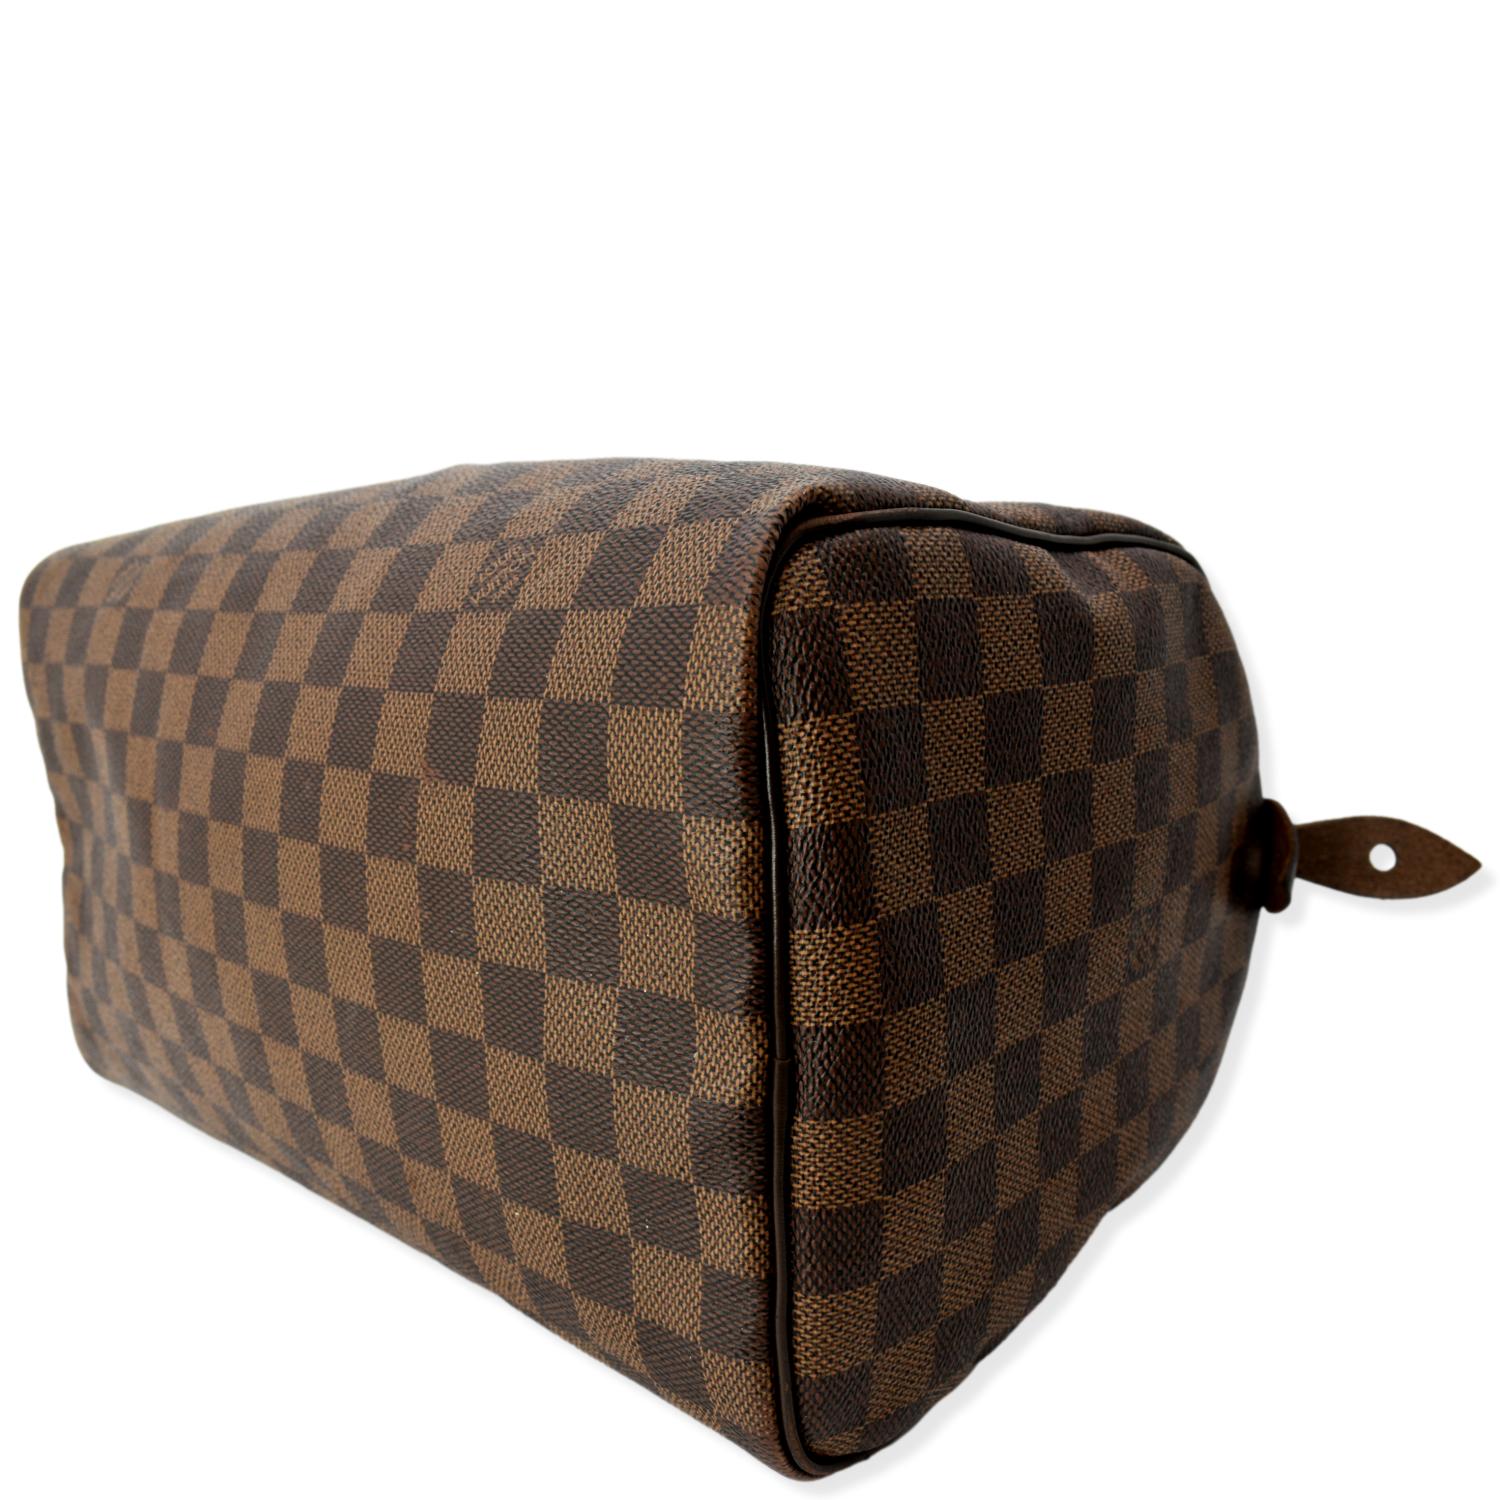 Louis Vuitton Speedy 30 Handbag in Ebene Damier Canvas and Brown